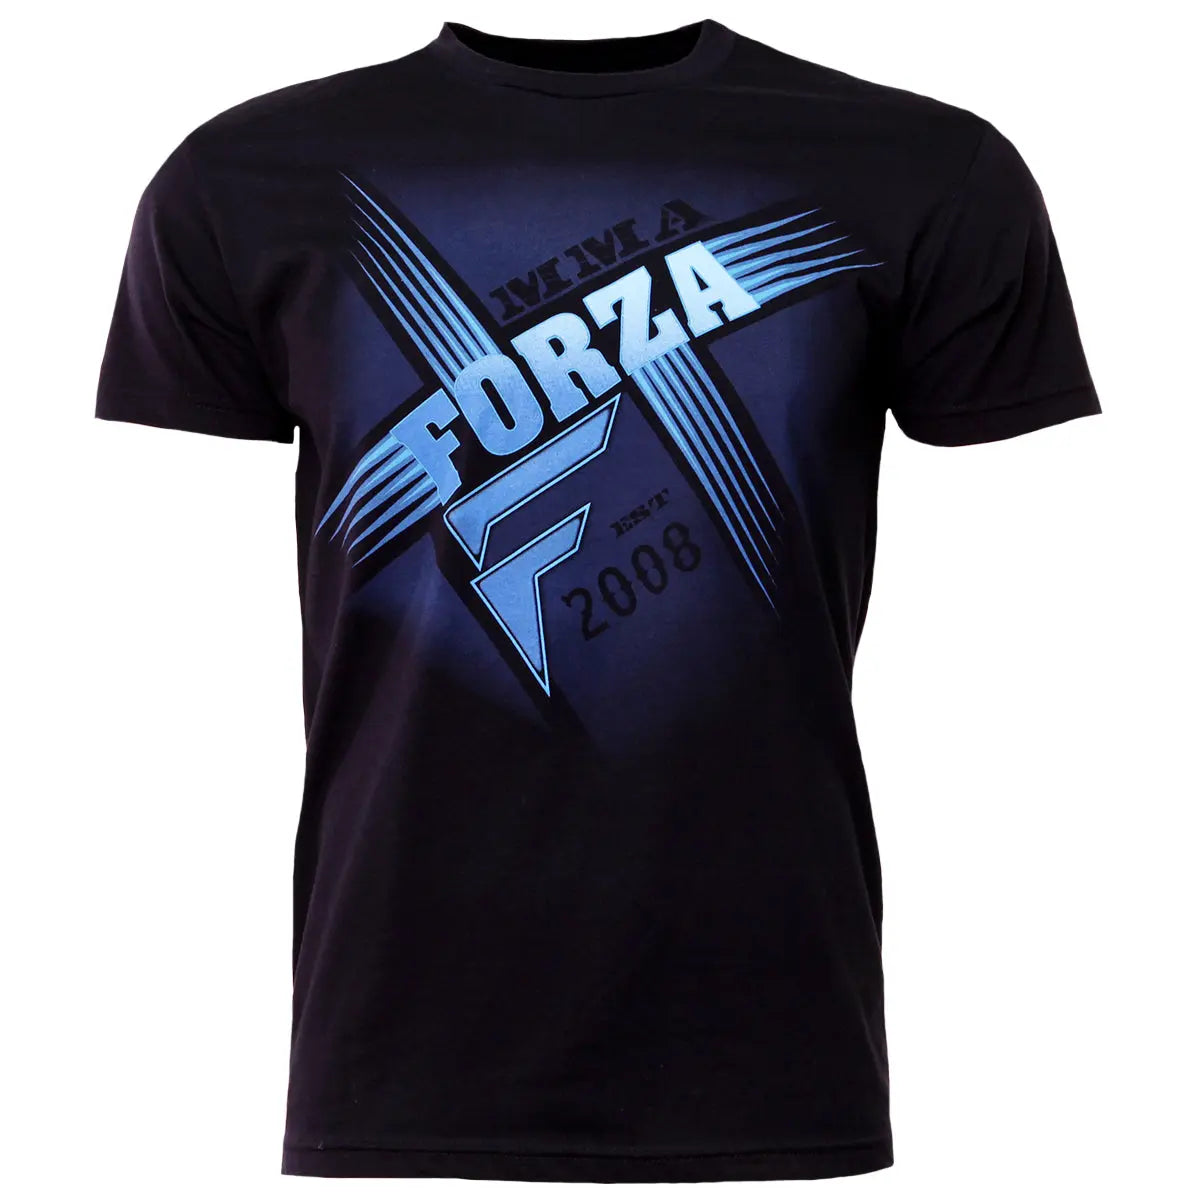 Forza Sports "Crossroads" MMA T-Shirt - Black Forza Sports